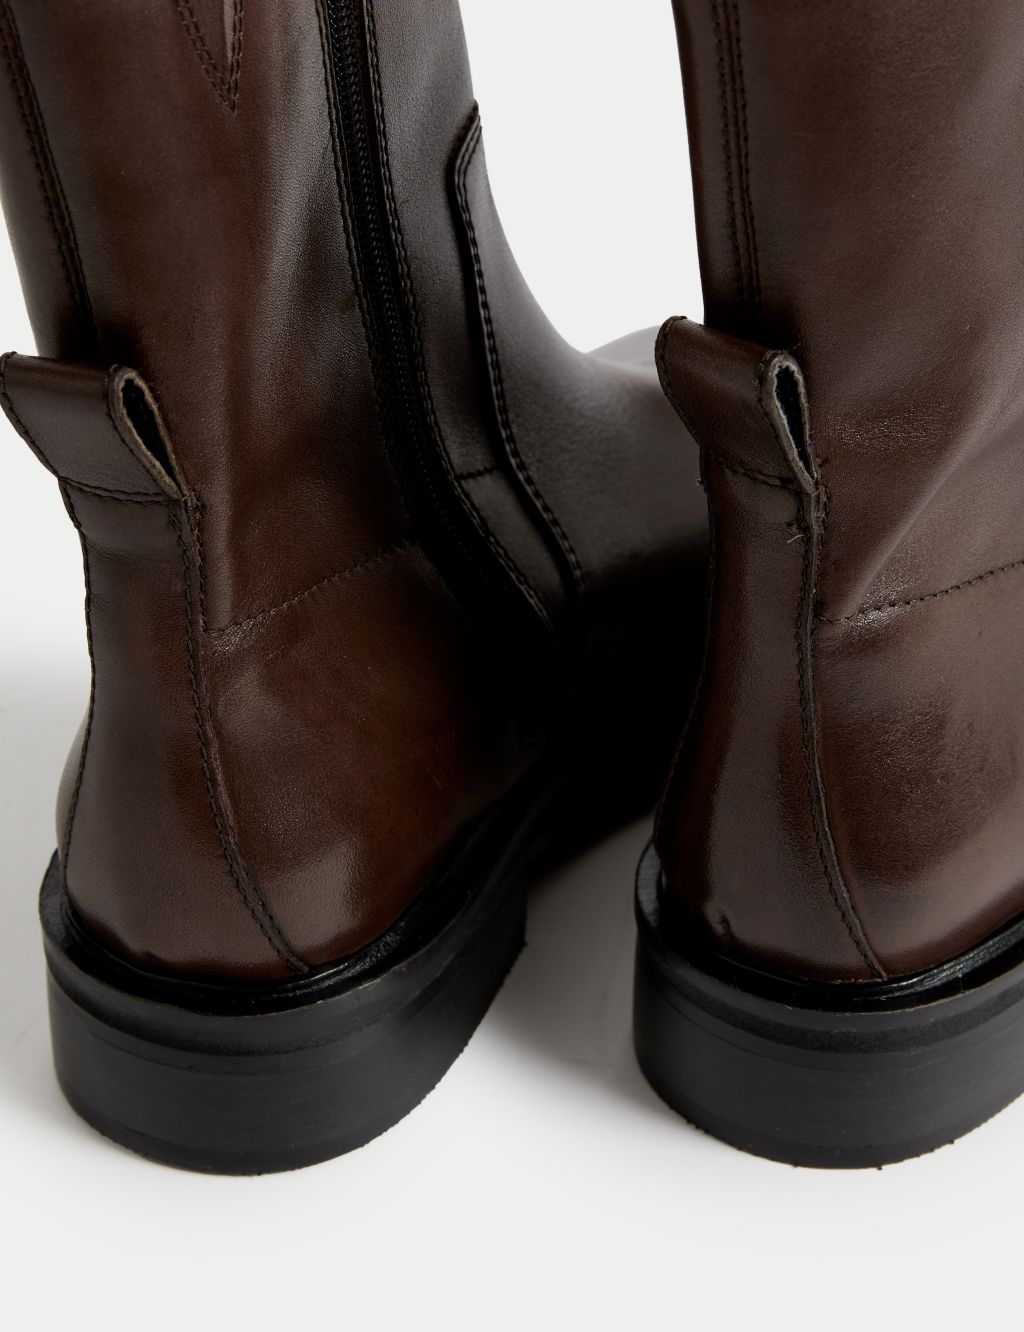 Leather Flatform Round Toe Ankle Boots image 3